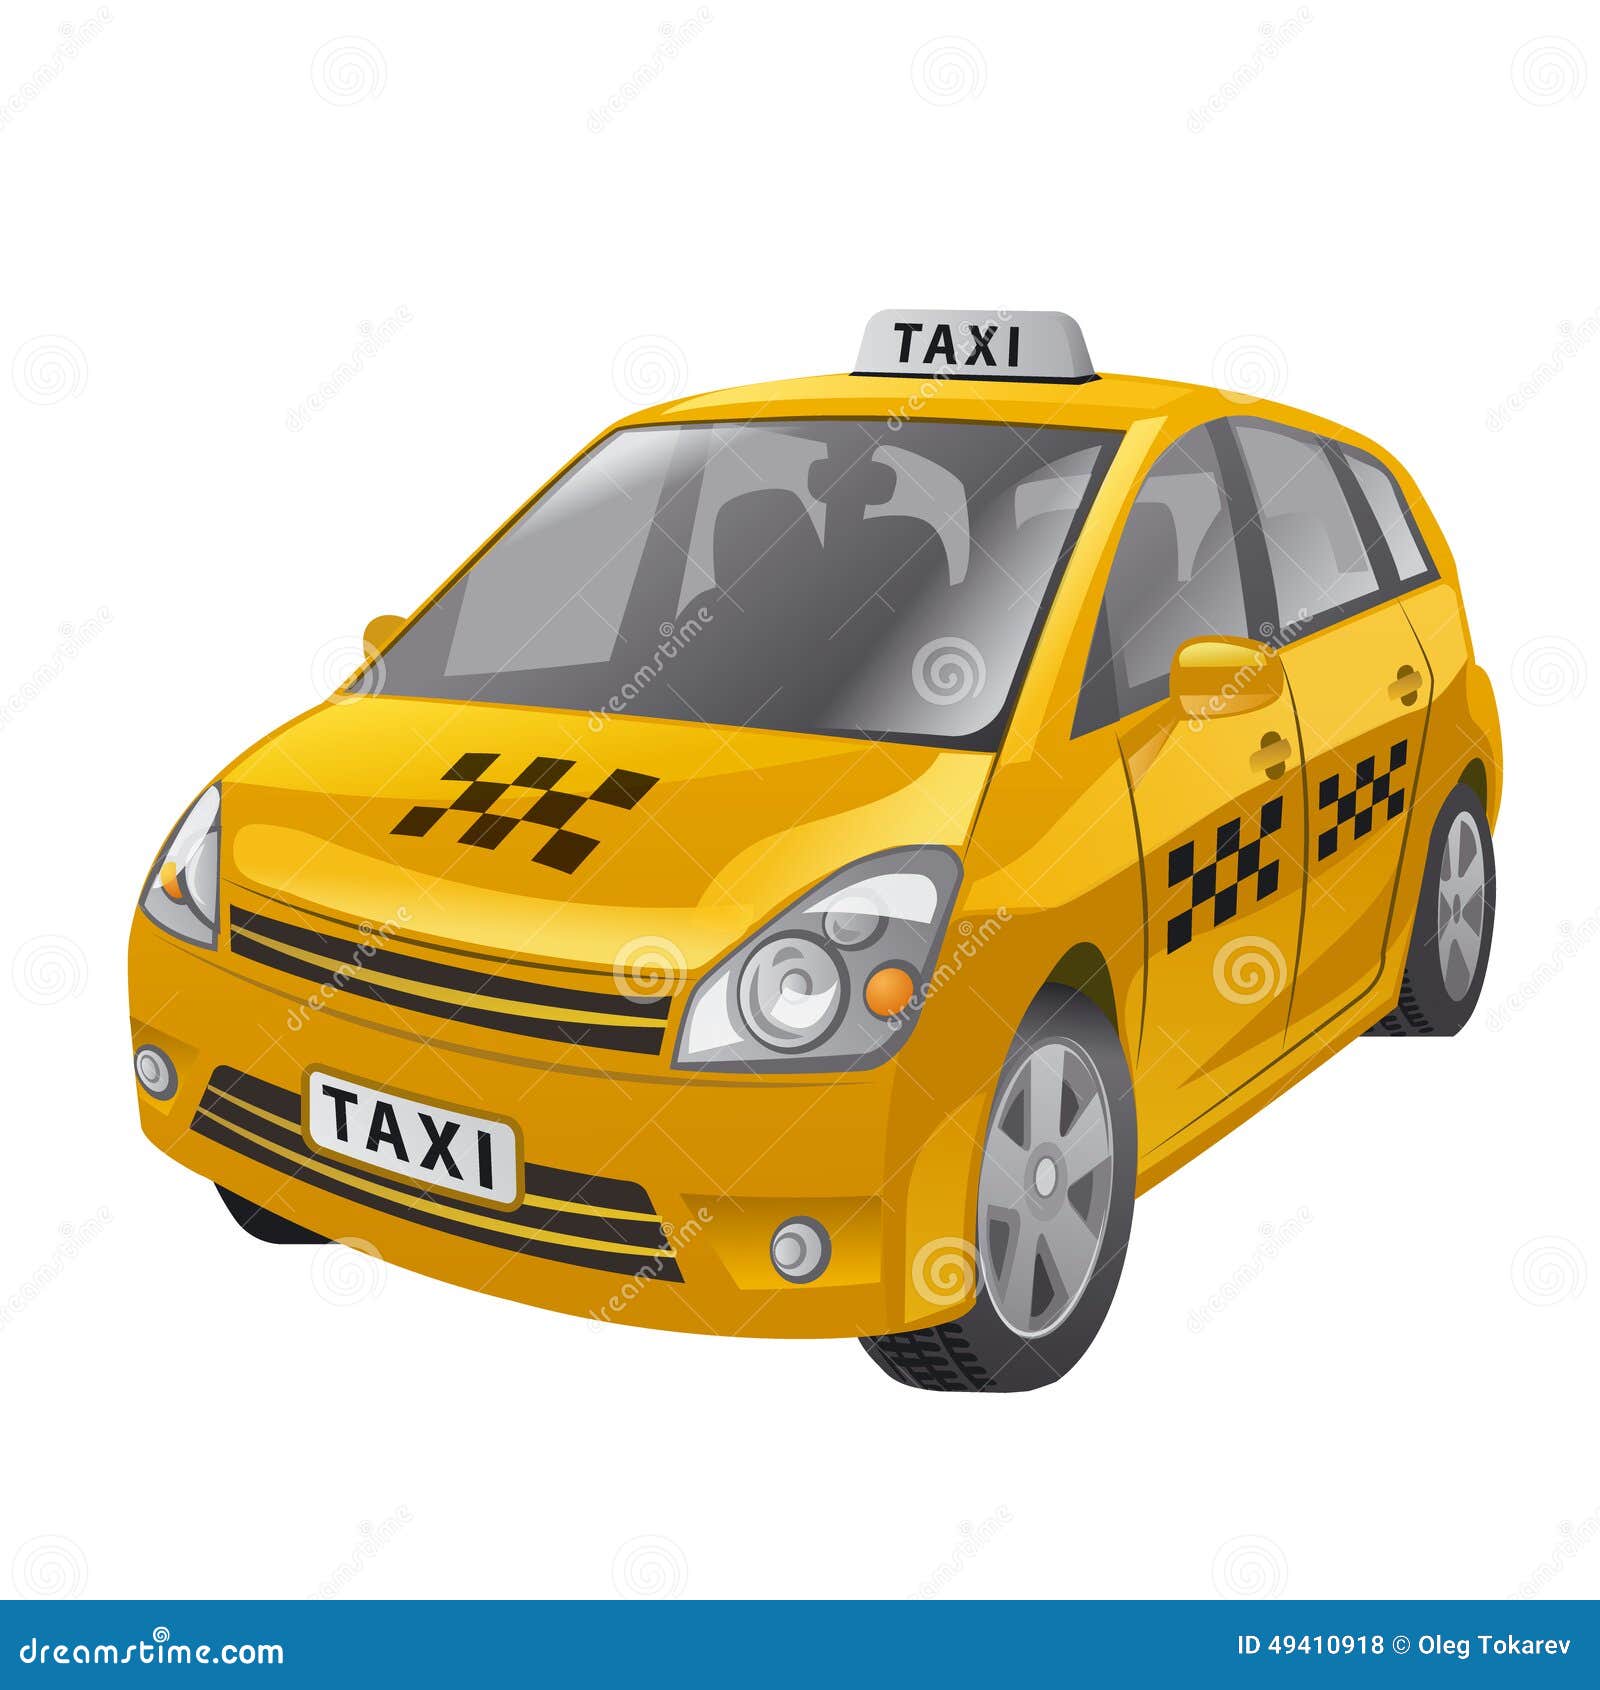 Такси тарко сале телефон. Мультяшная машинка такси. Такси рисунок. Нарисовать такси. Машина "такси".